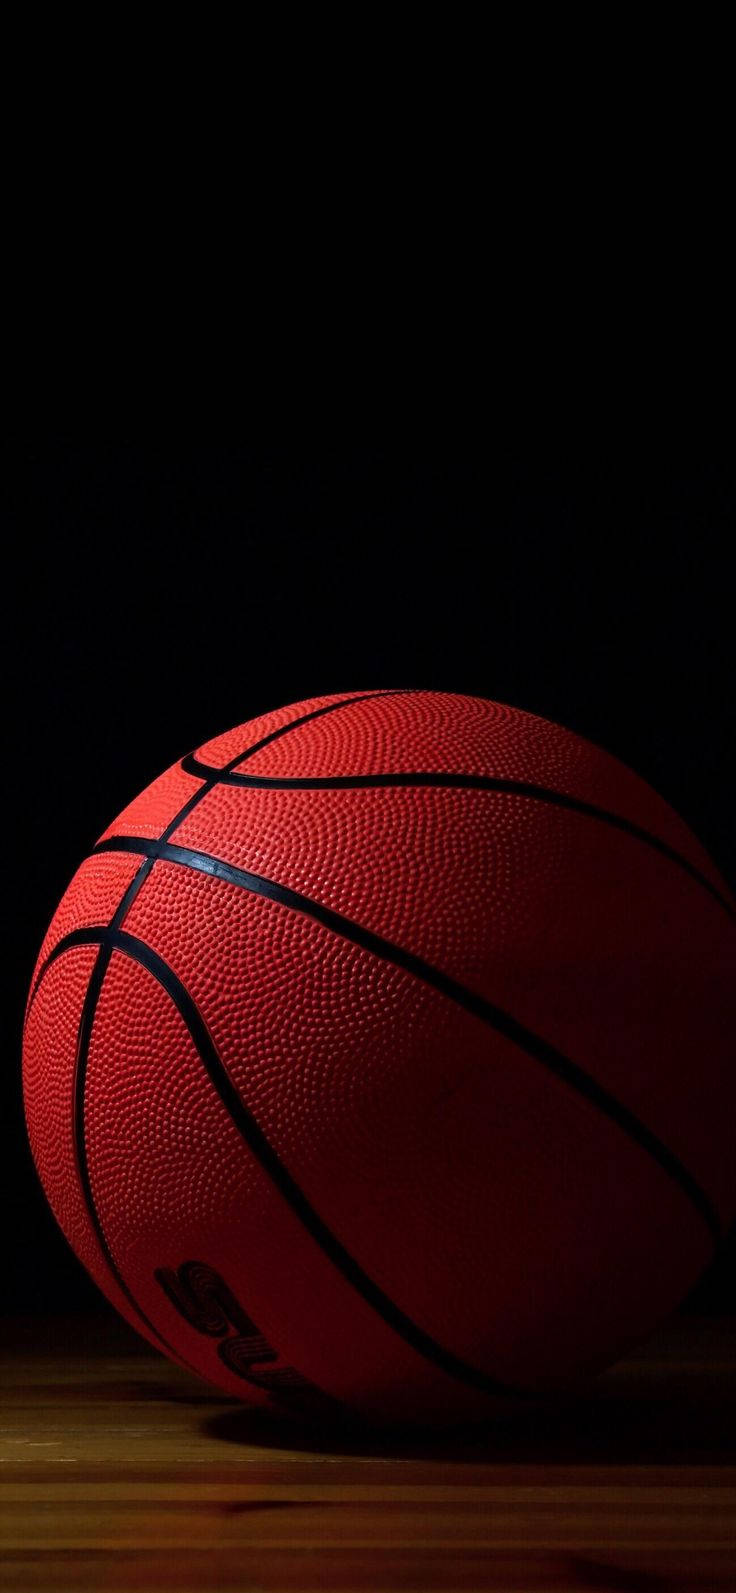 Ball Photography Cool Basketball Iphone